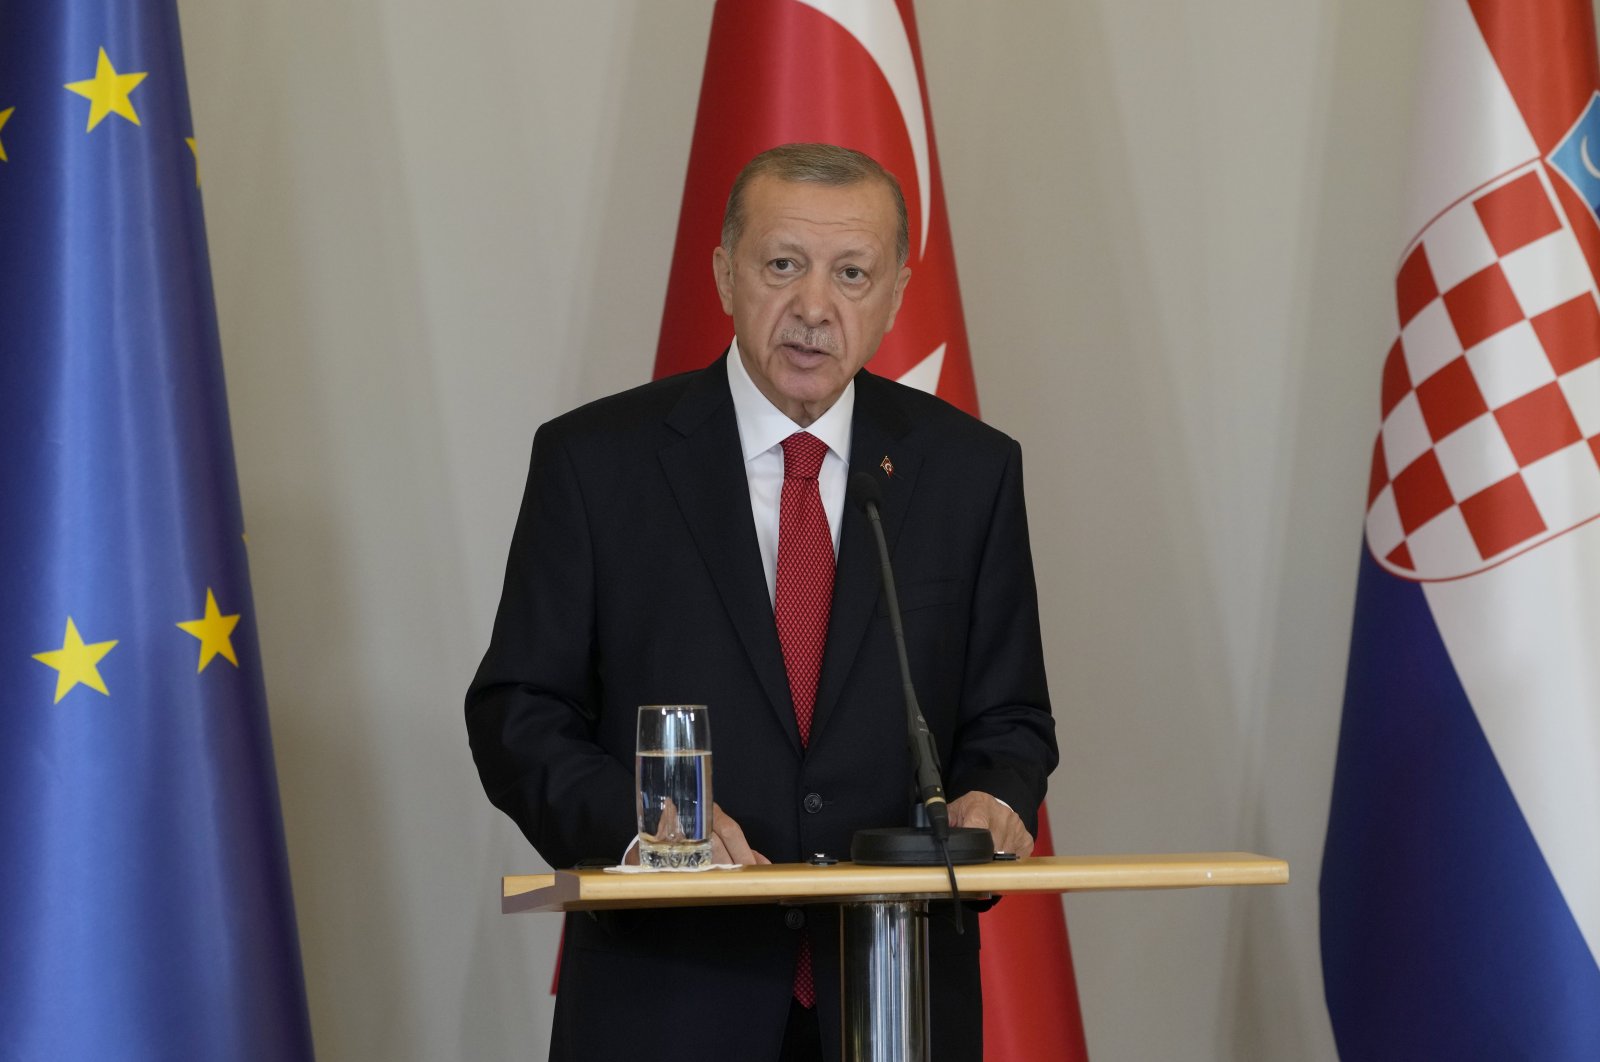 President Recep Tayyip Erdoğan addresses the media after meeting his Croatian counterpart Zoran Milanovic in Zagreb, Croatia, Sept. 8, 2022. (AP Photo)